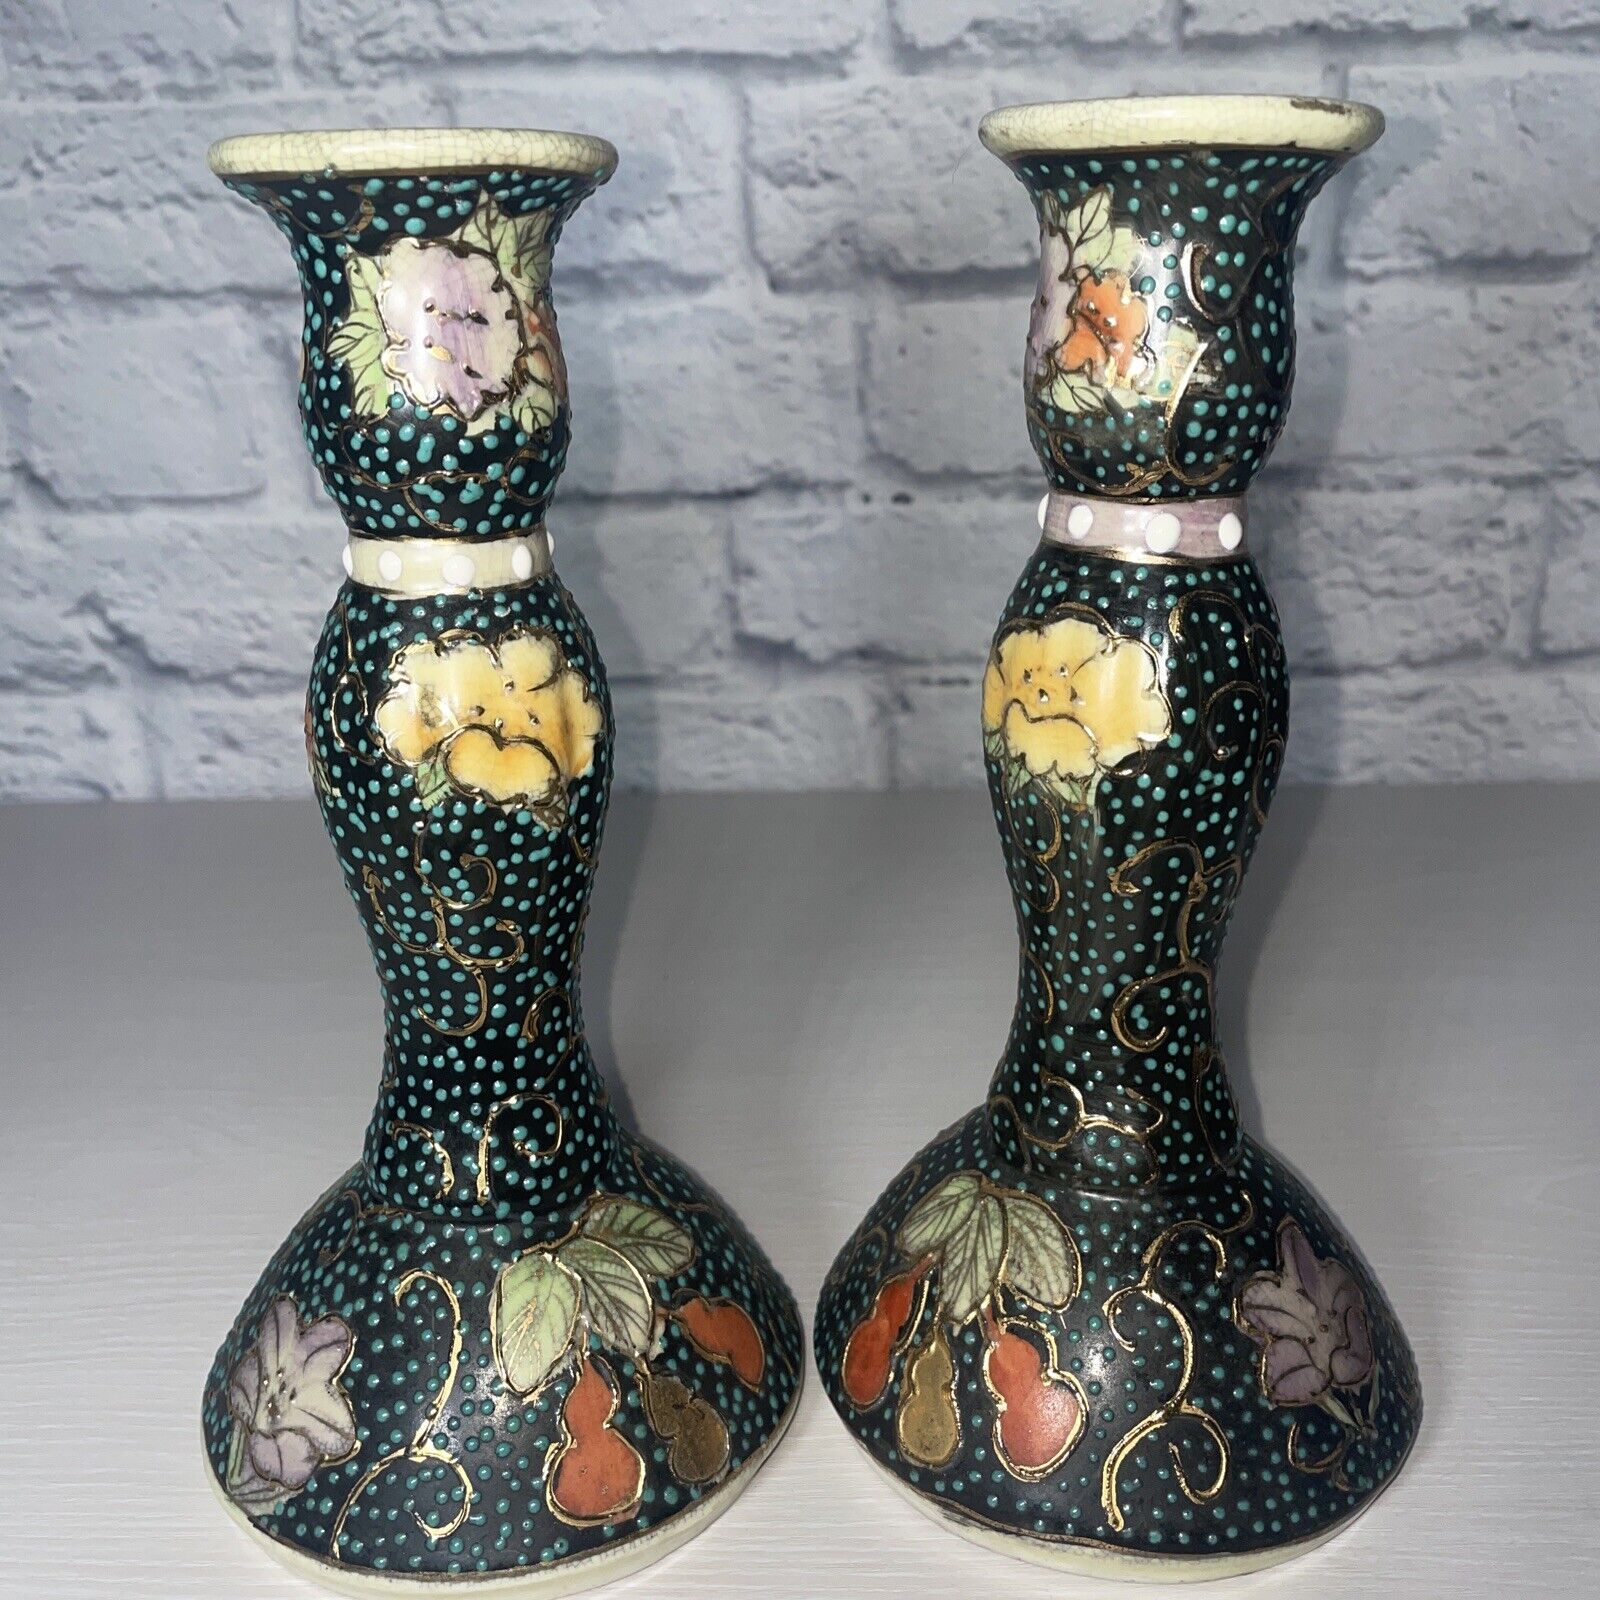 2 Vintage Hand Painted Ceramic Candlestick Set Polka Dot Asian Floral Multicolor